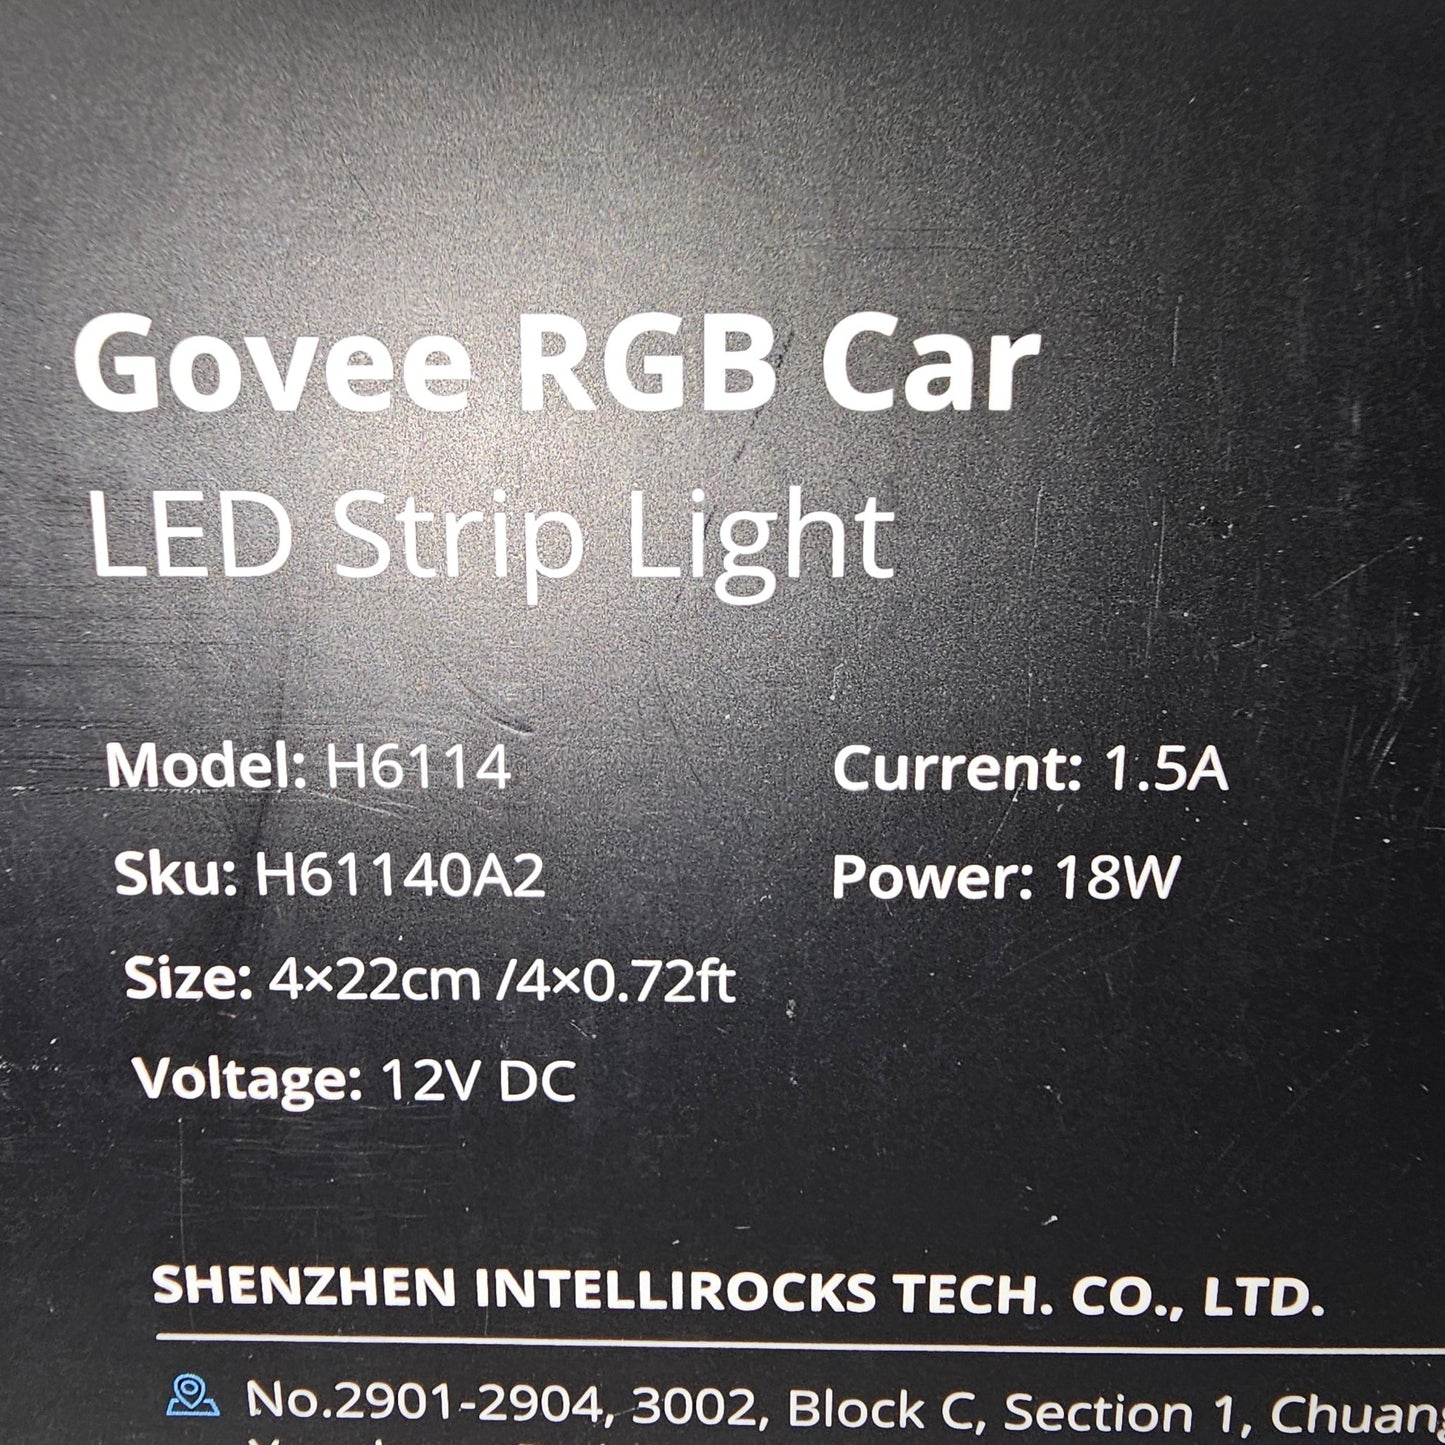 RGB Car LED Strip Lights Govee H6114 - DQ Distribution